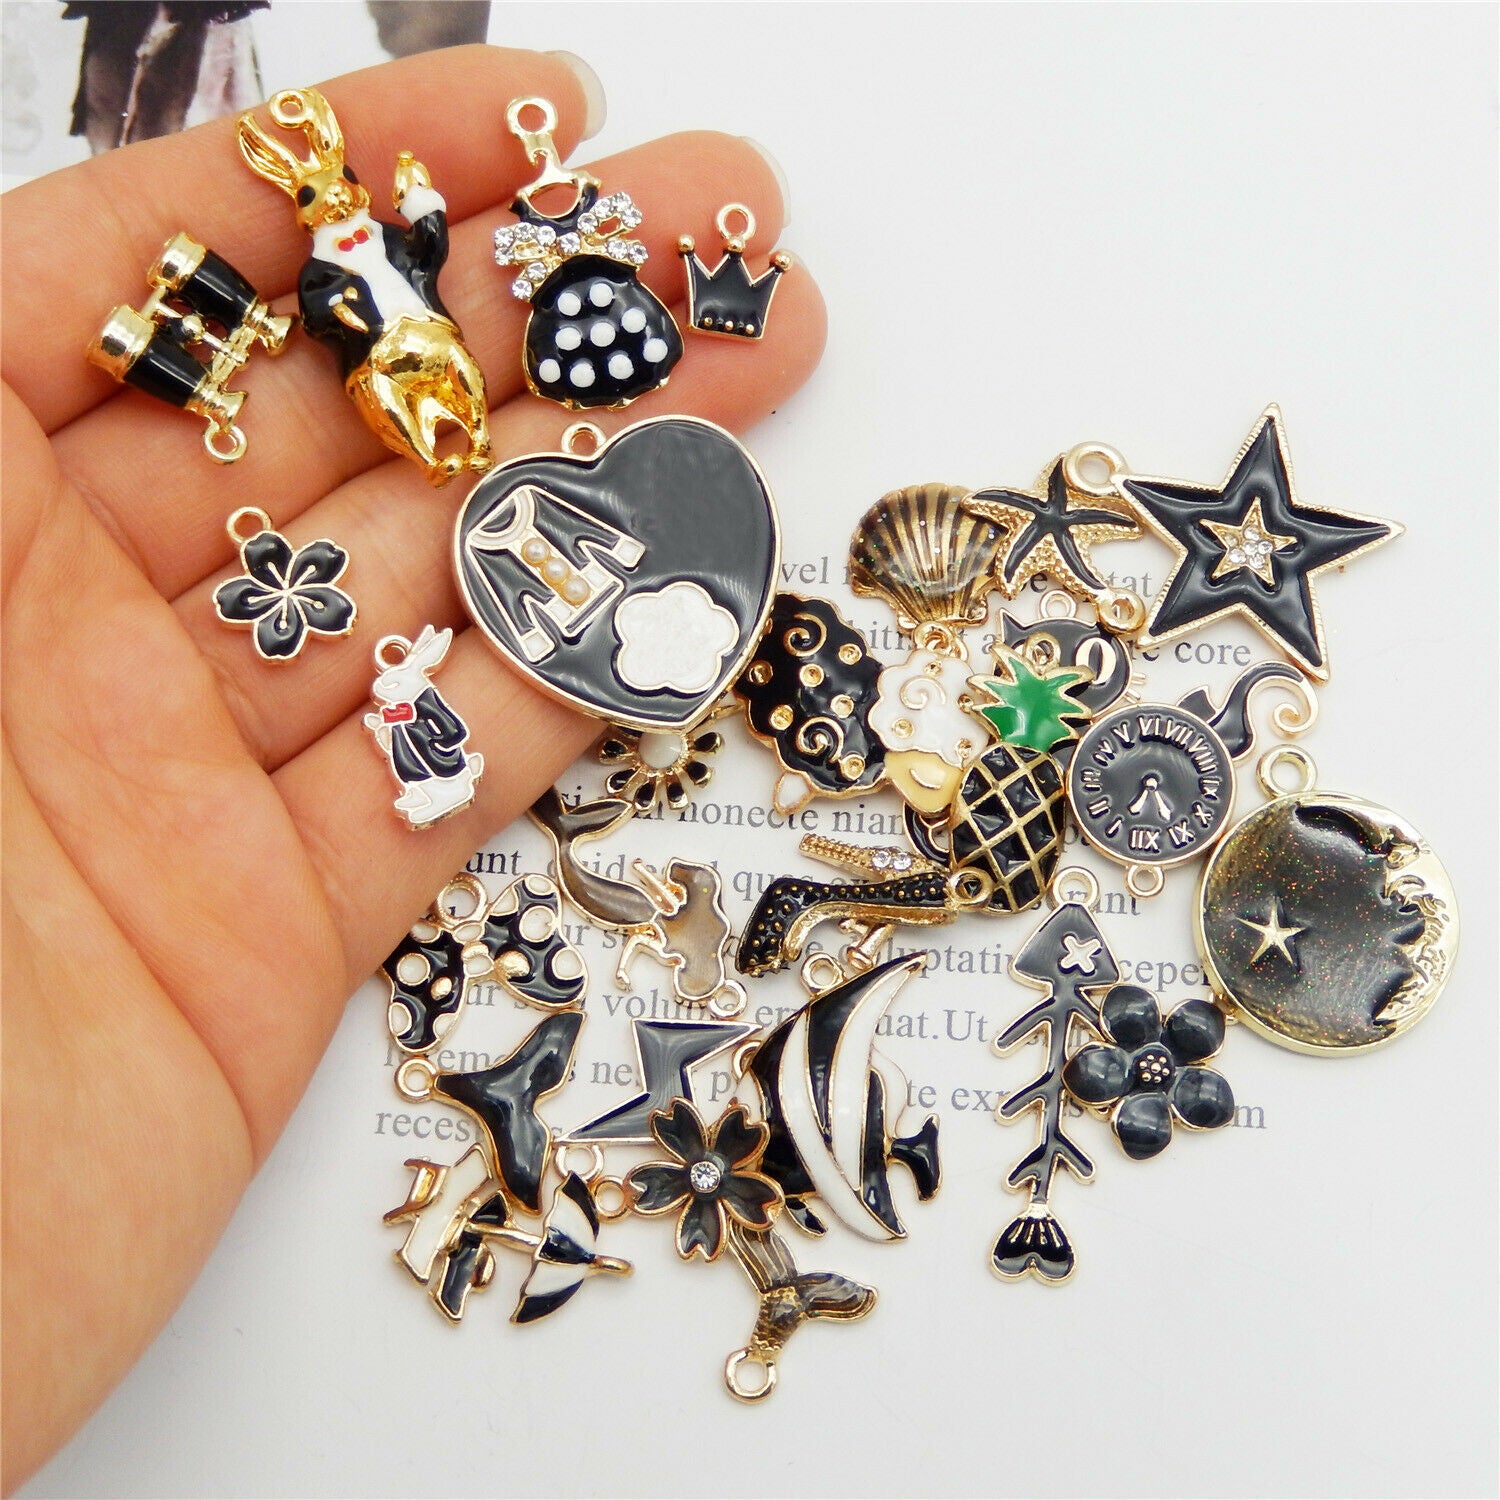 10 Mix Black Enamel Charm For Jewelry Making Pendant Dangle DIY Crafting 1-3cm